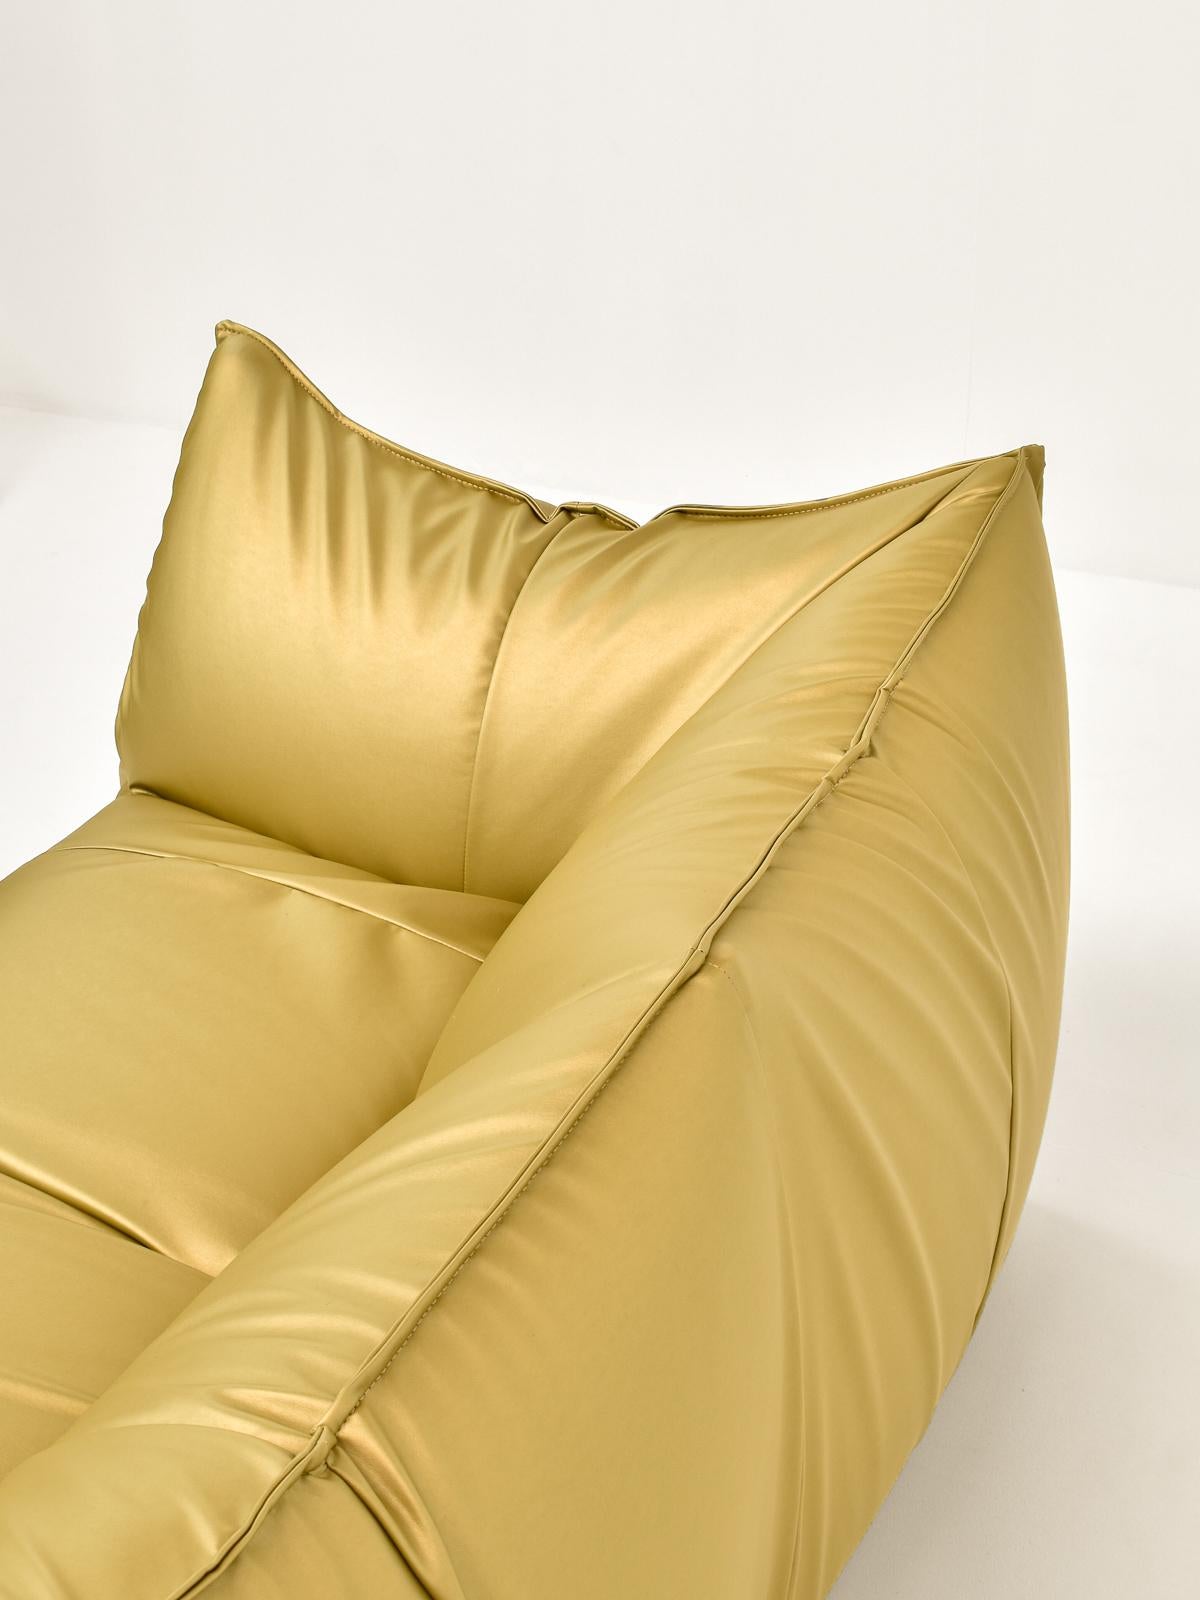 Golden Le Bambole Sofa by Mario Bellini for B&B Italia 4